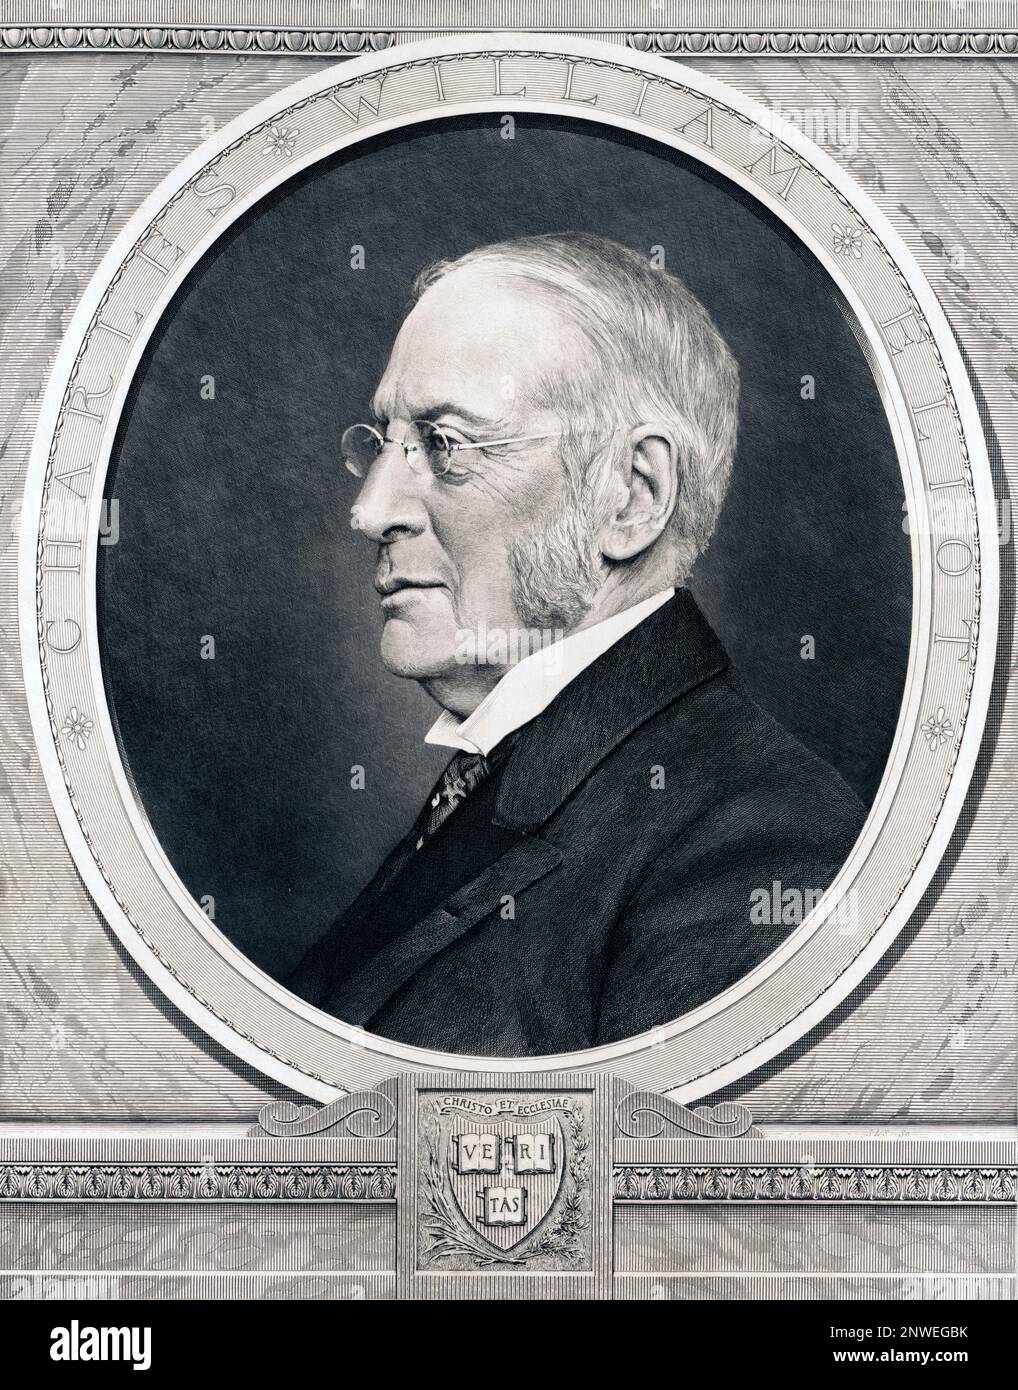 Charles Eliot, Charles William Eliot (1834-1926), amerikanischer Akademiker Stockfoto